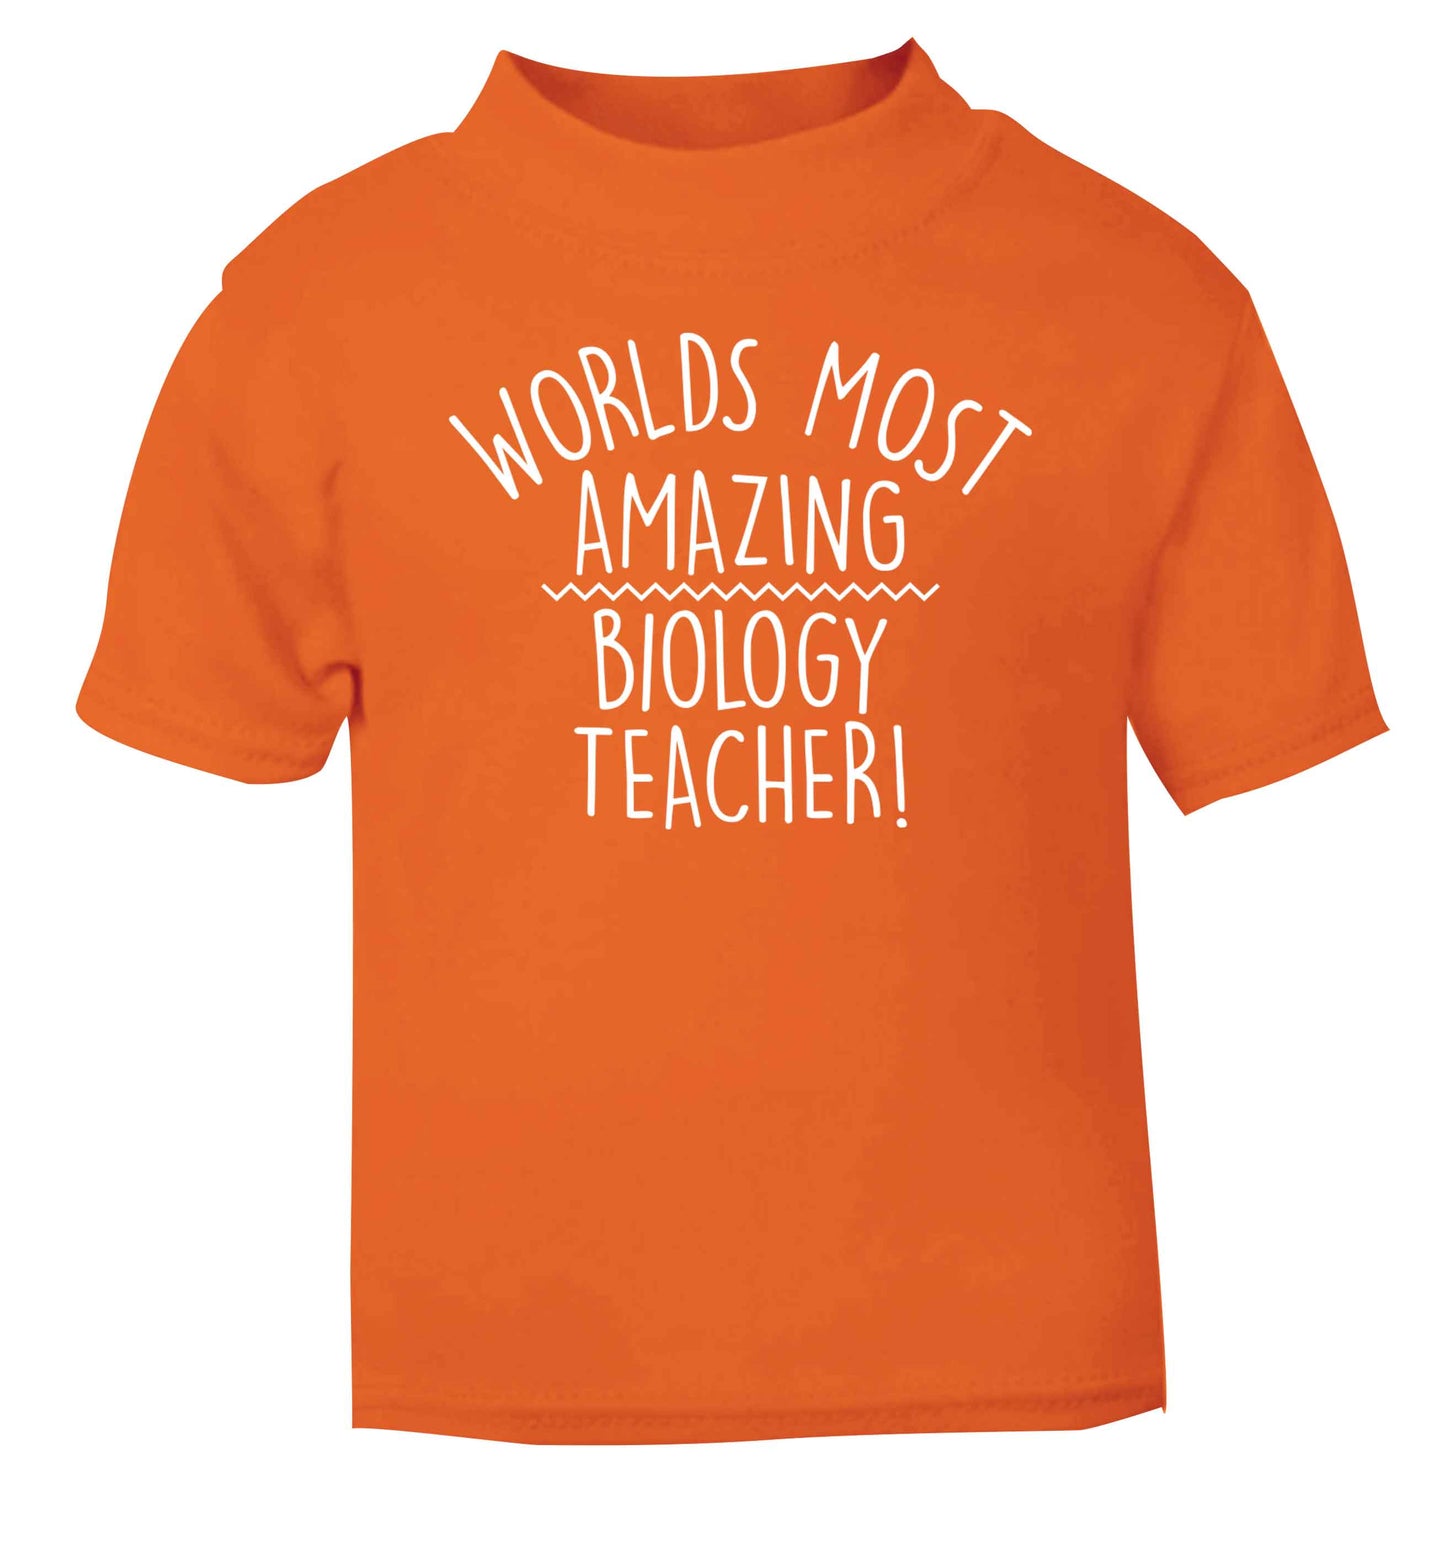 Worlds most amazing biology teacher orange baby toddler Tshirt 2 Years